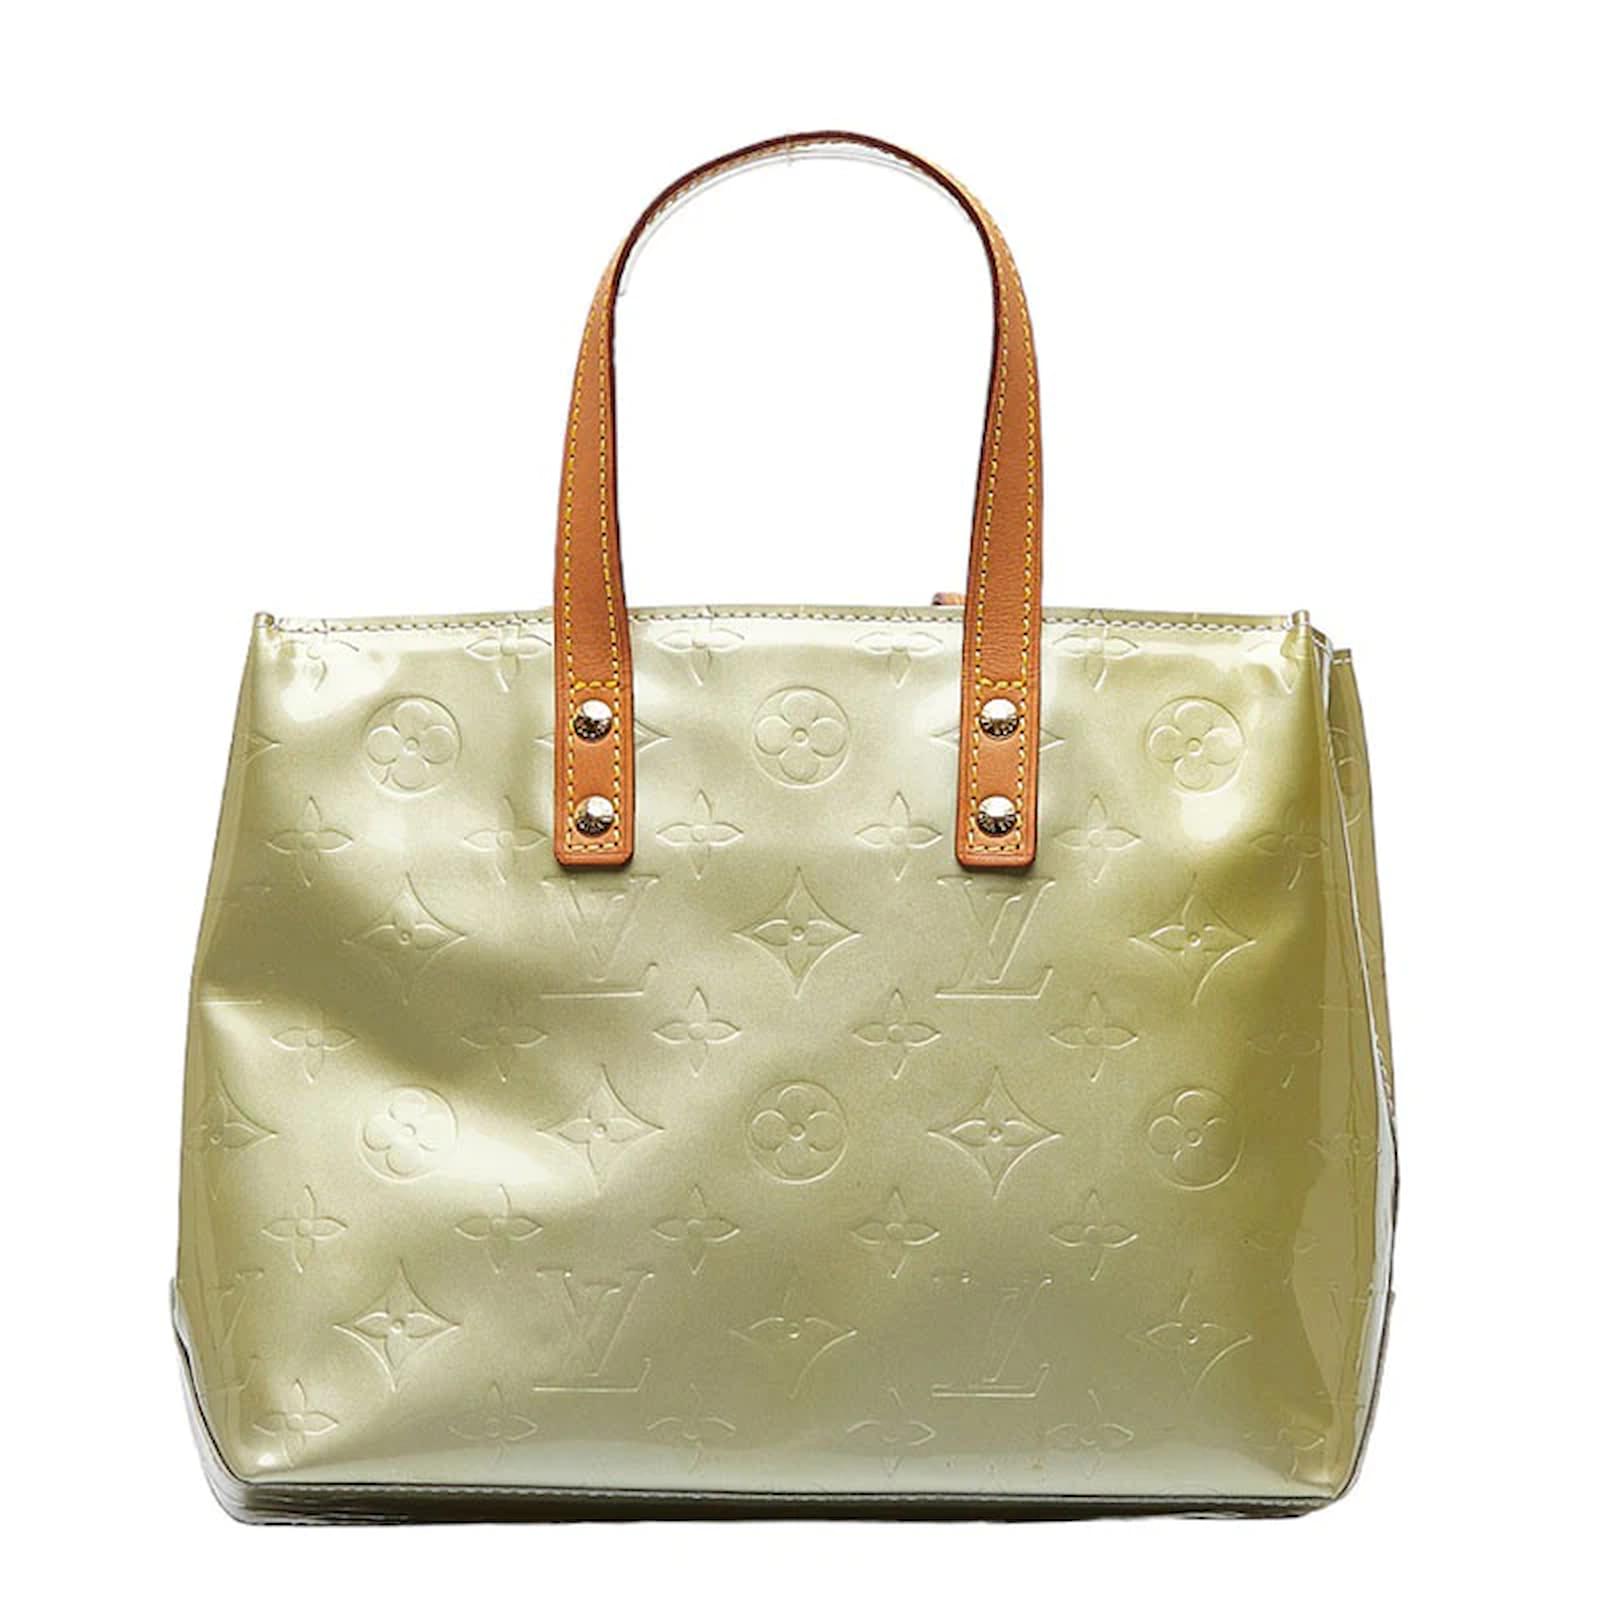 louis vuitton white patent leather handbag